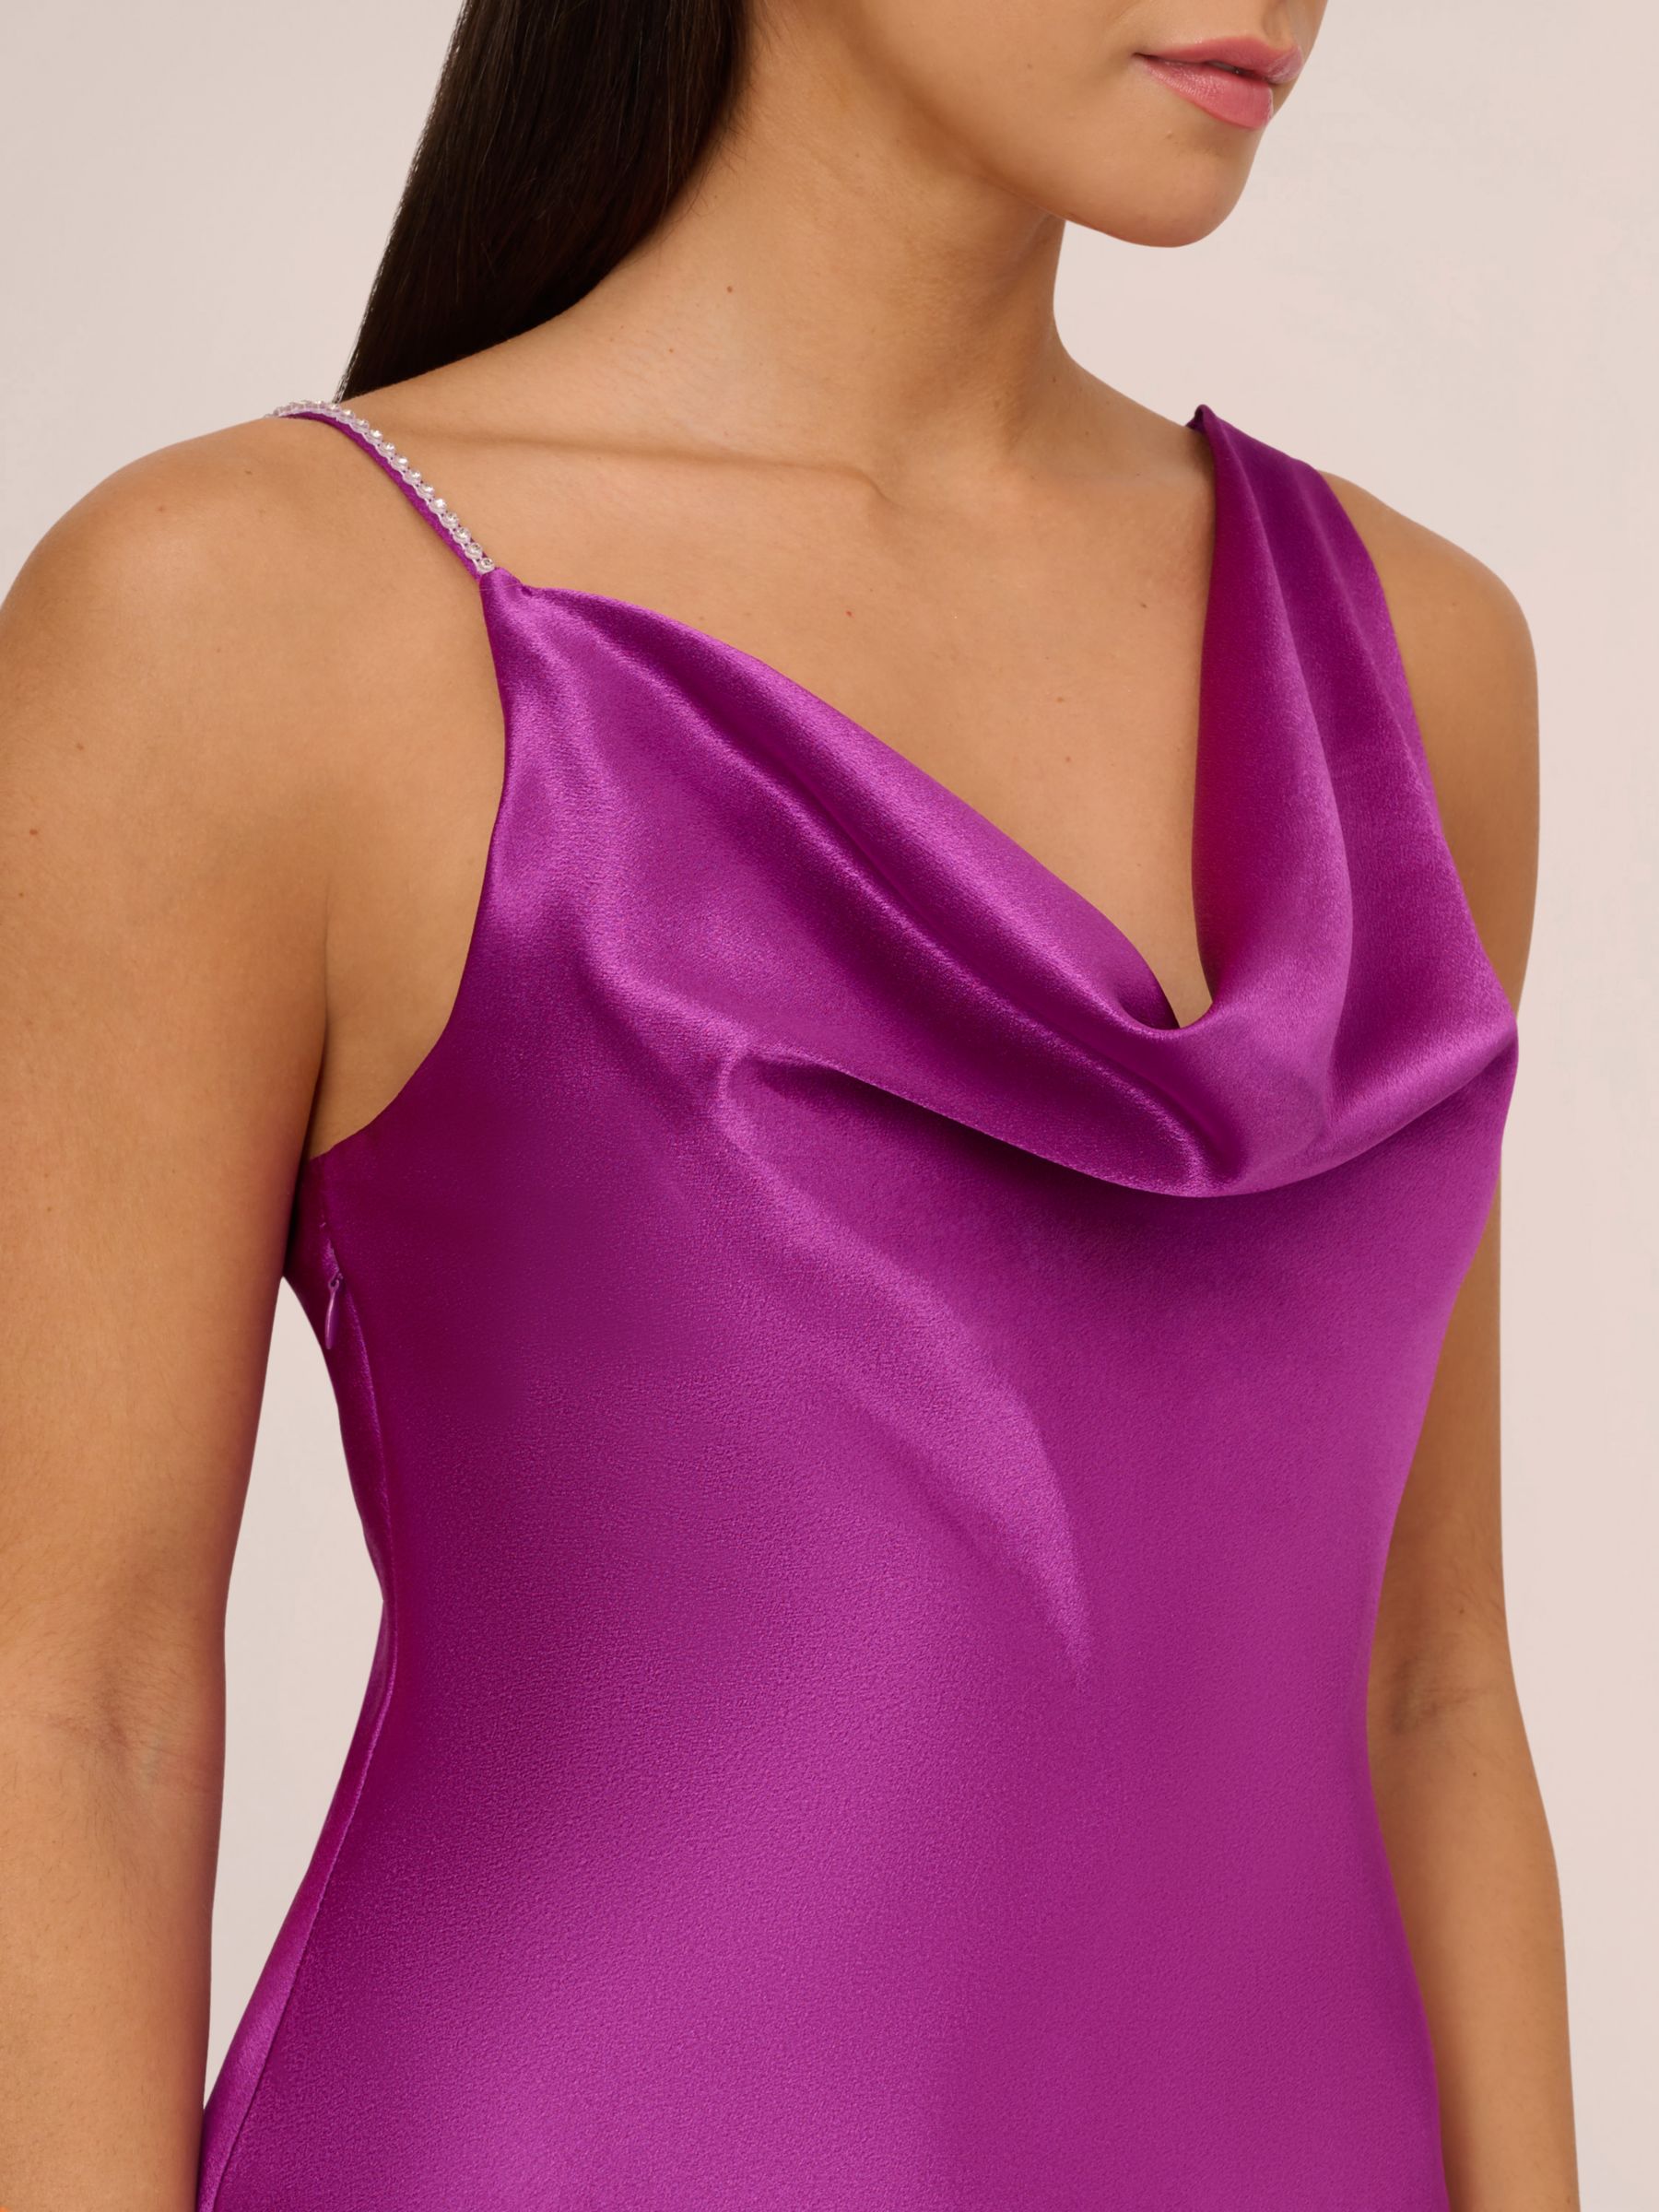 Buy Adrianna Papell Aidan Satin Asymmetric Dress, Wild Orchid Online at johnlewis.com